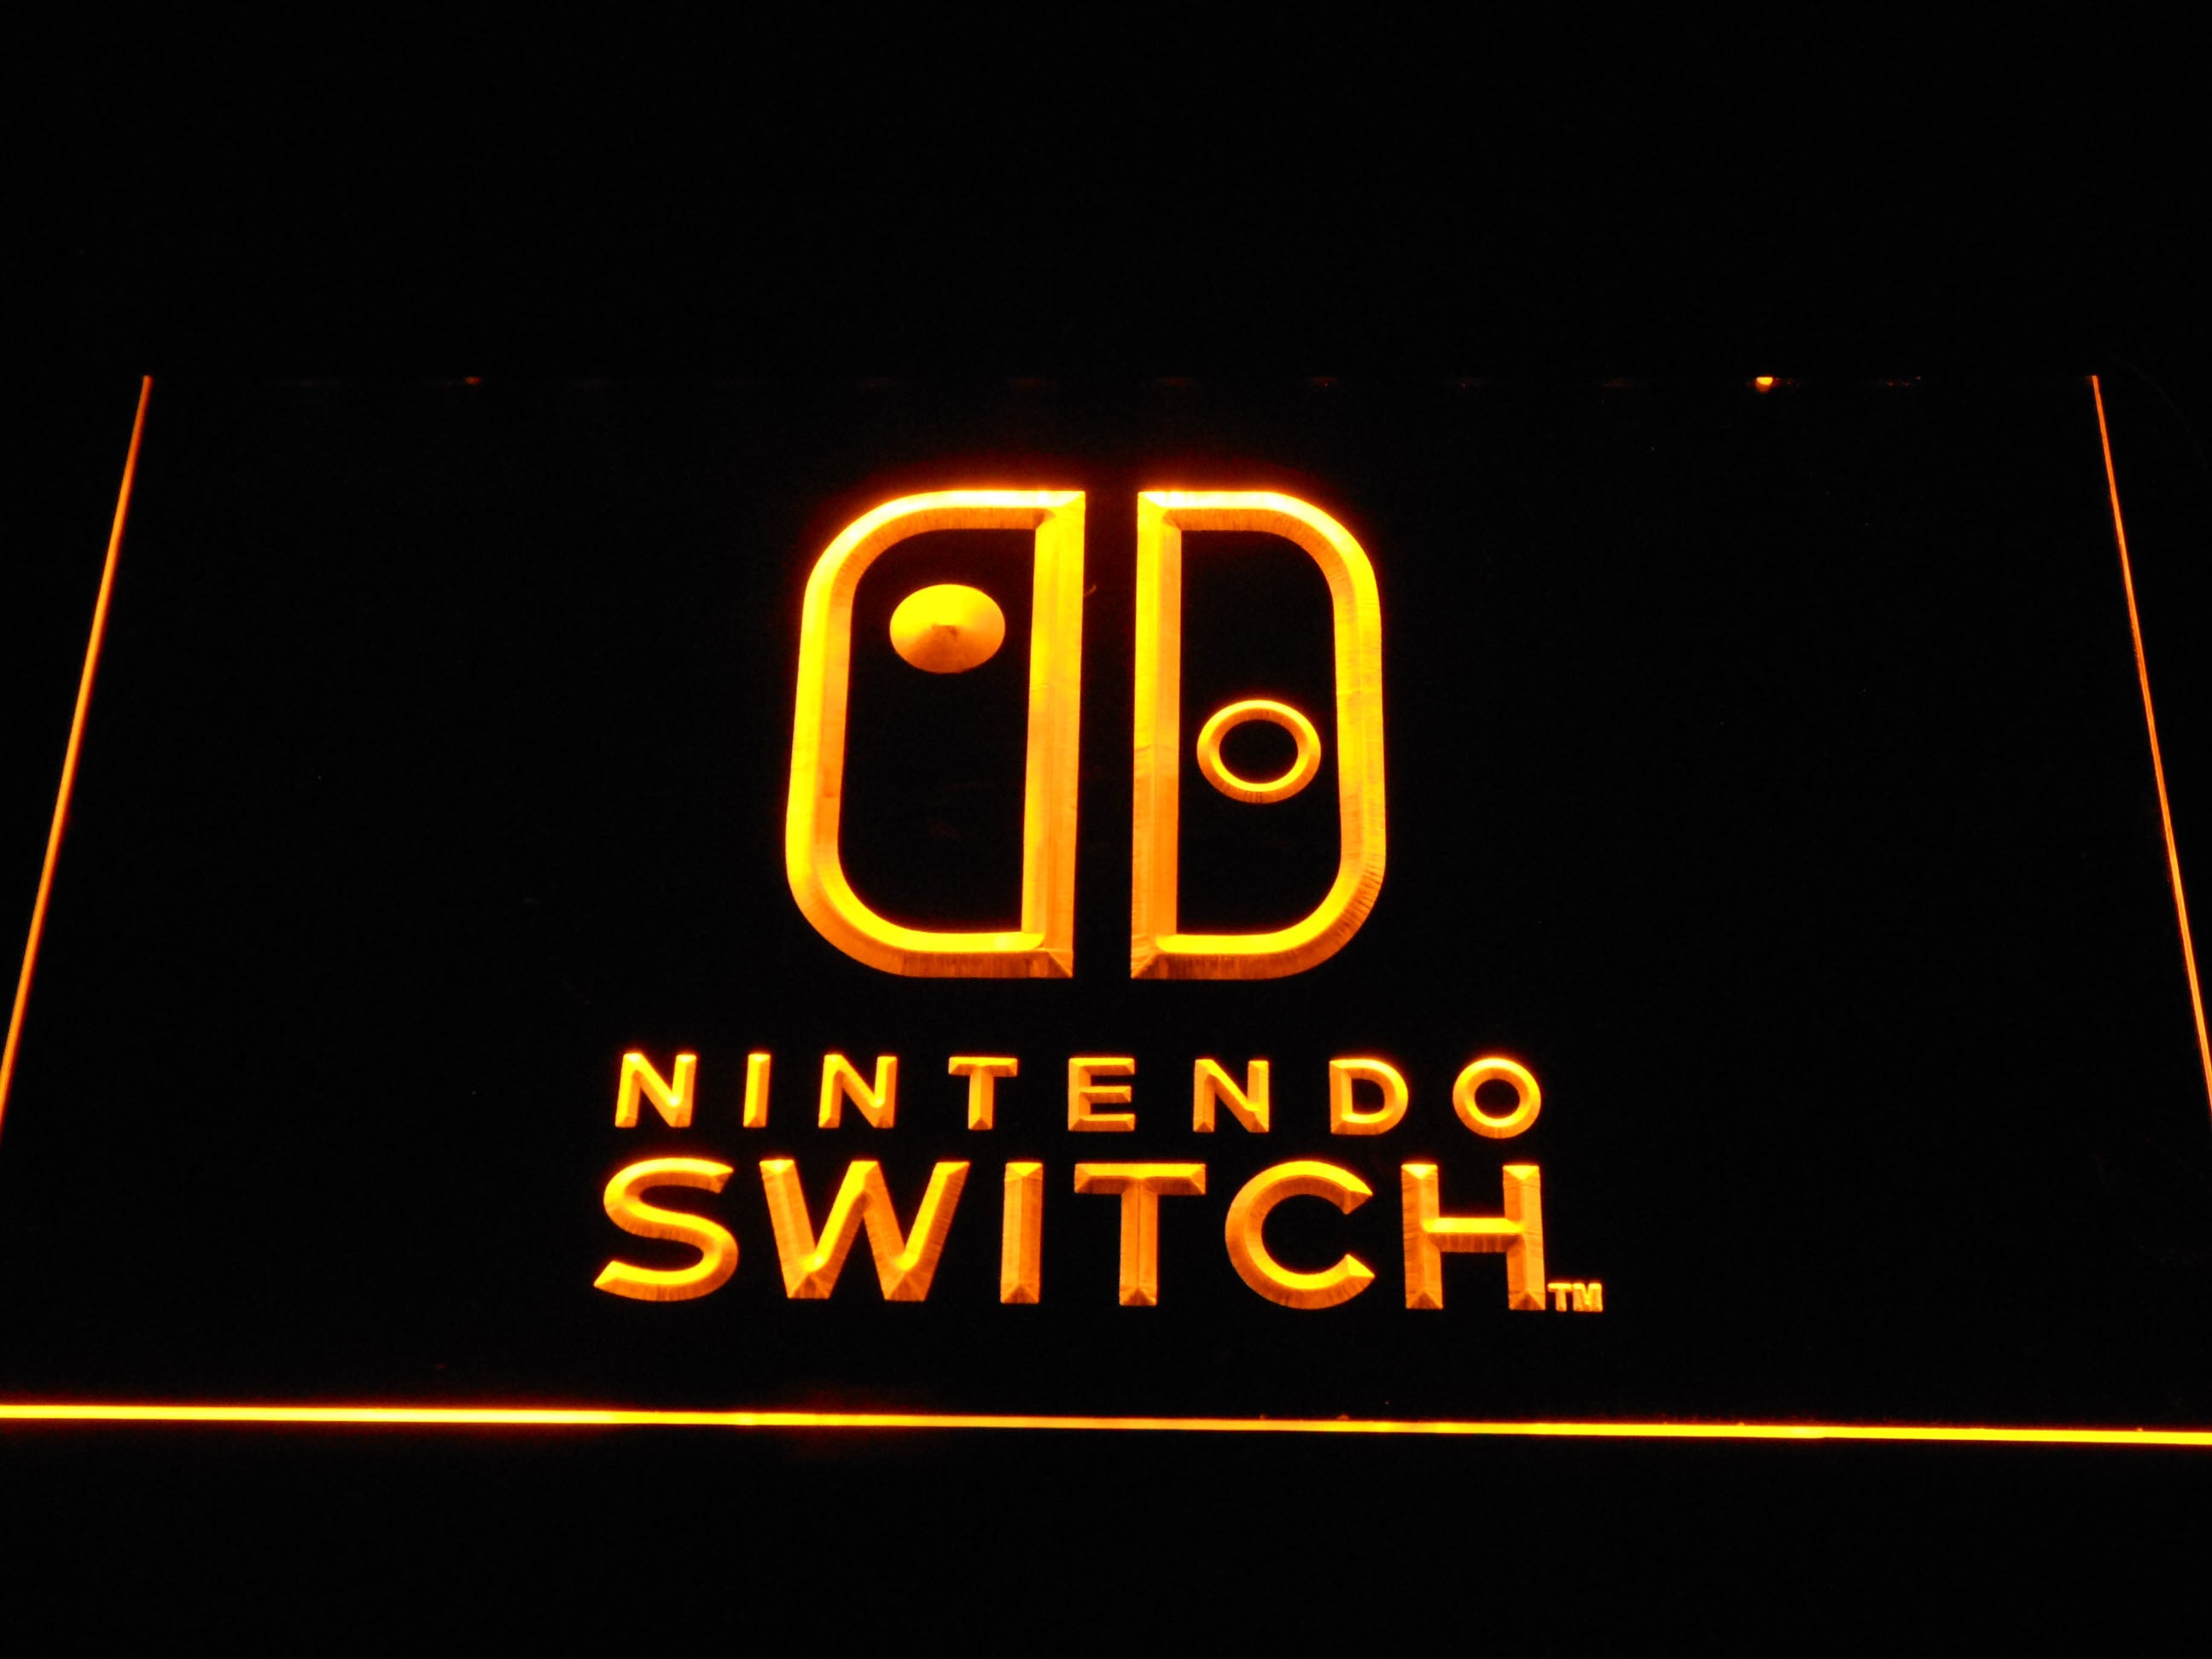 Nintendo Switch Neon Light LED Sign